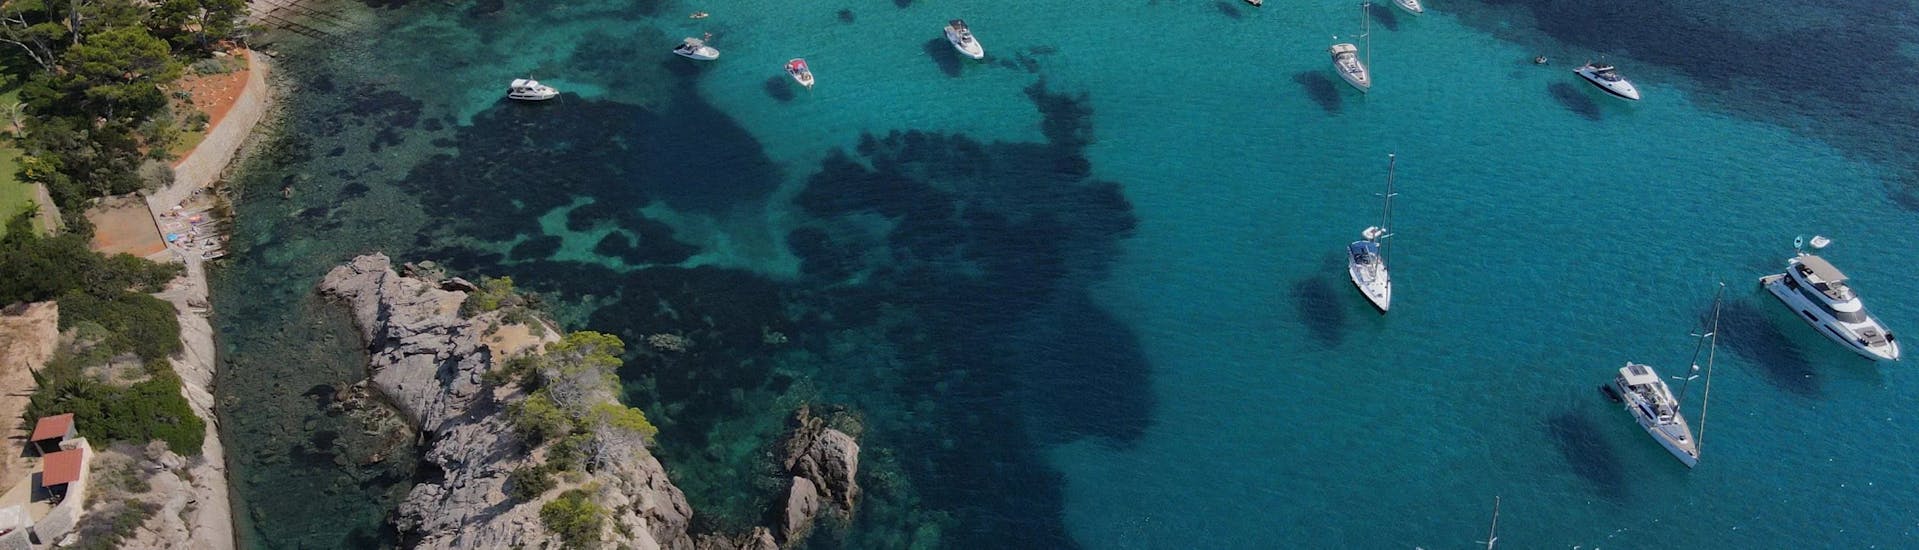 Boat Rental in Santa Eulària, Ibiza (up to 8 people).